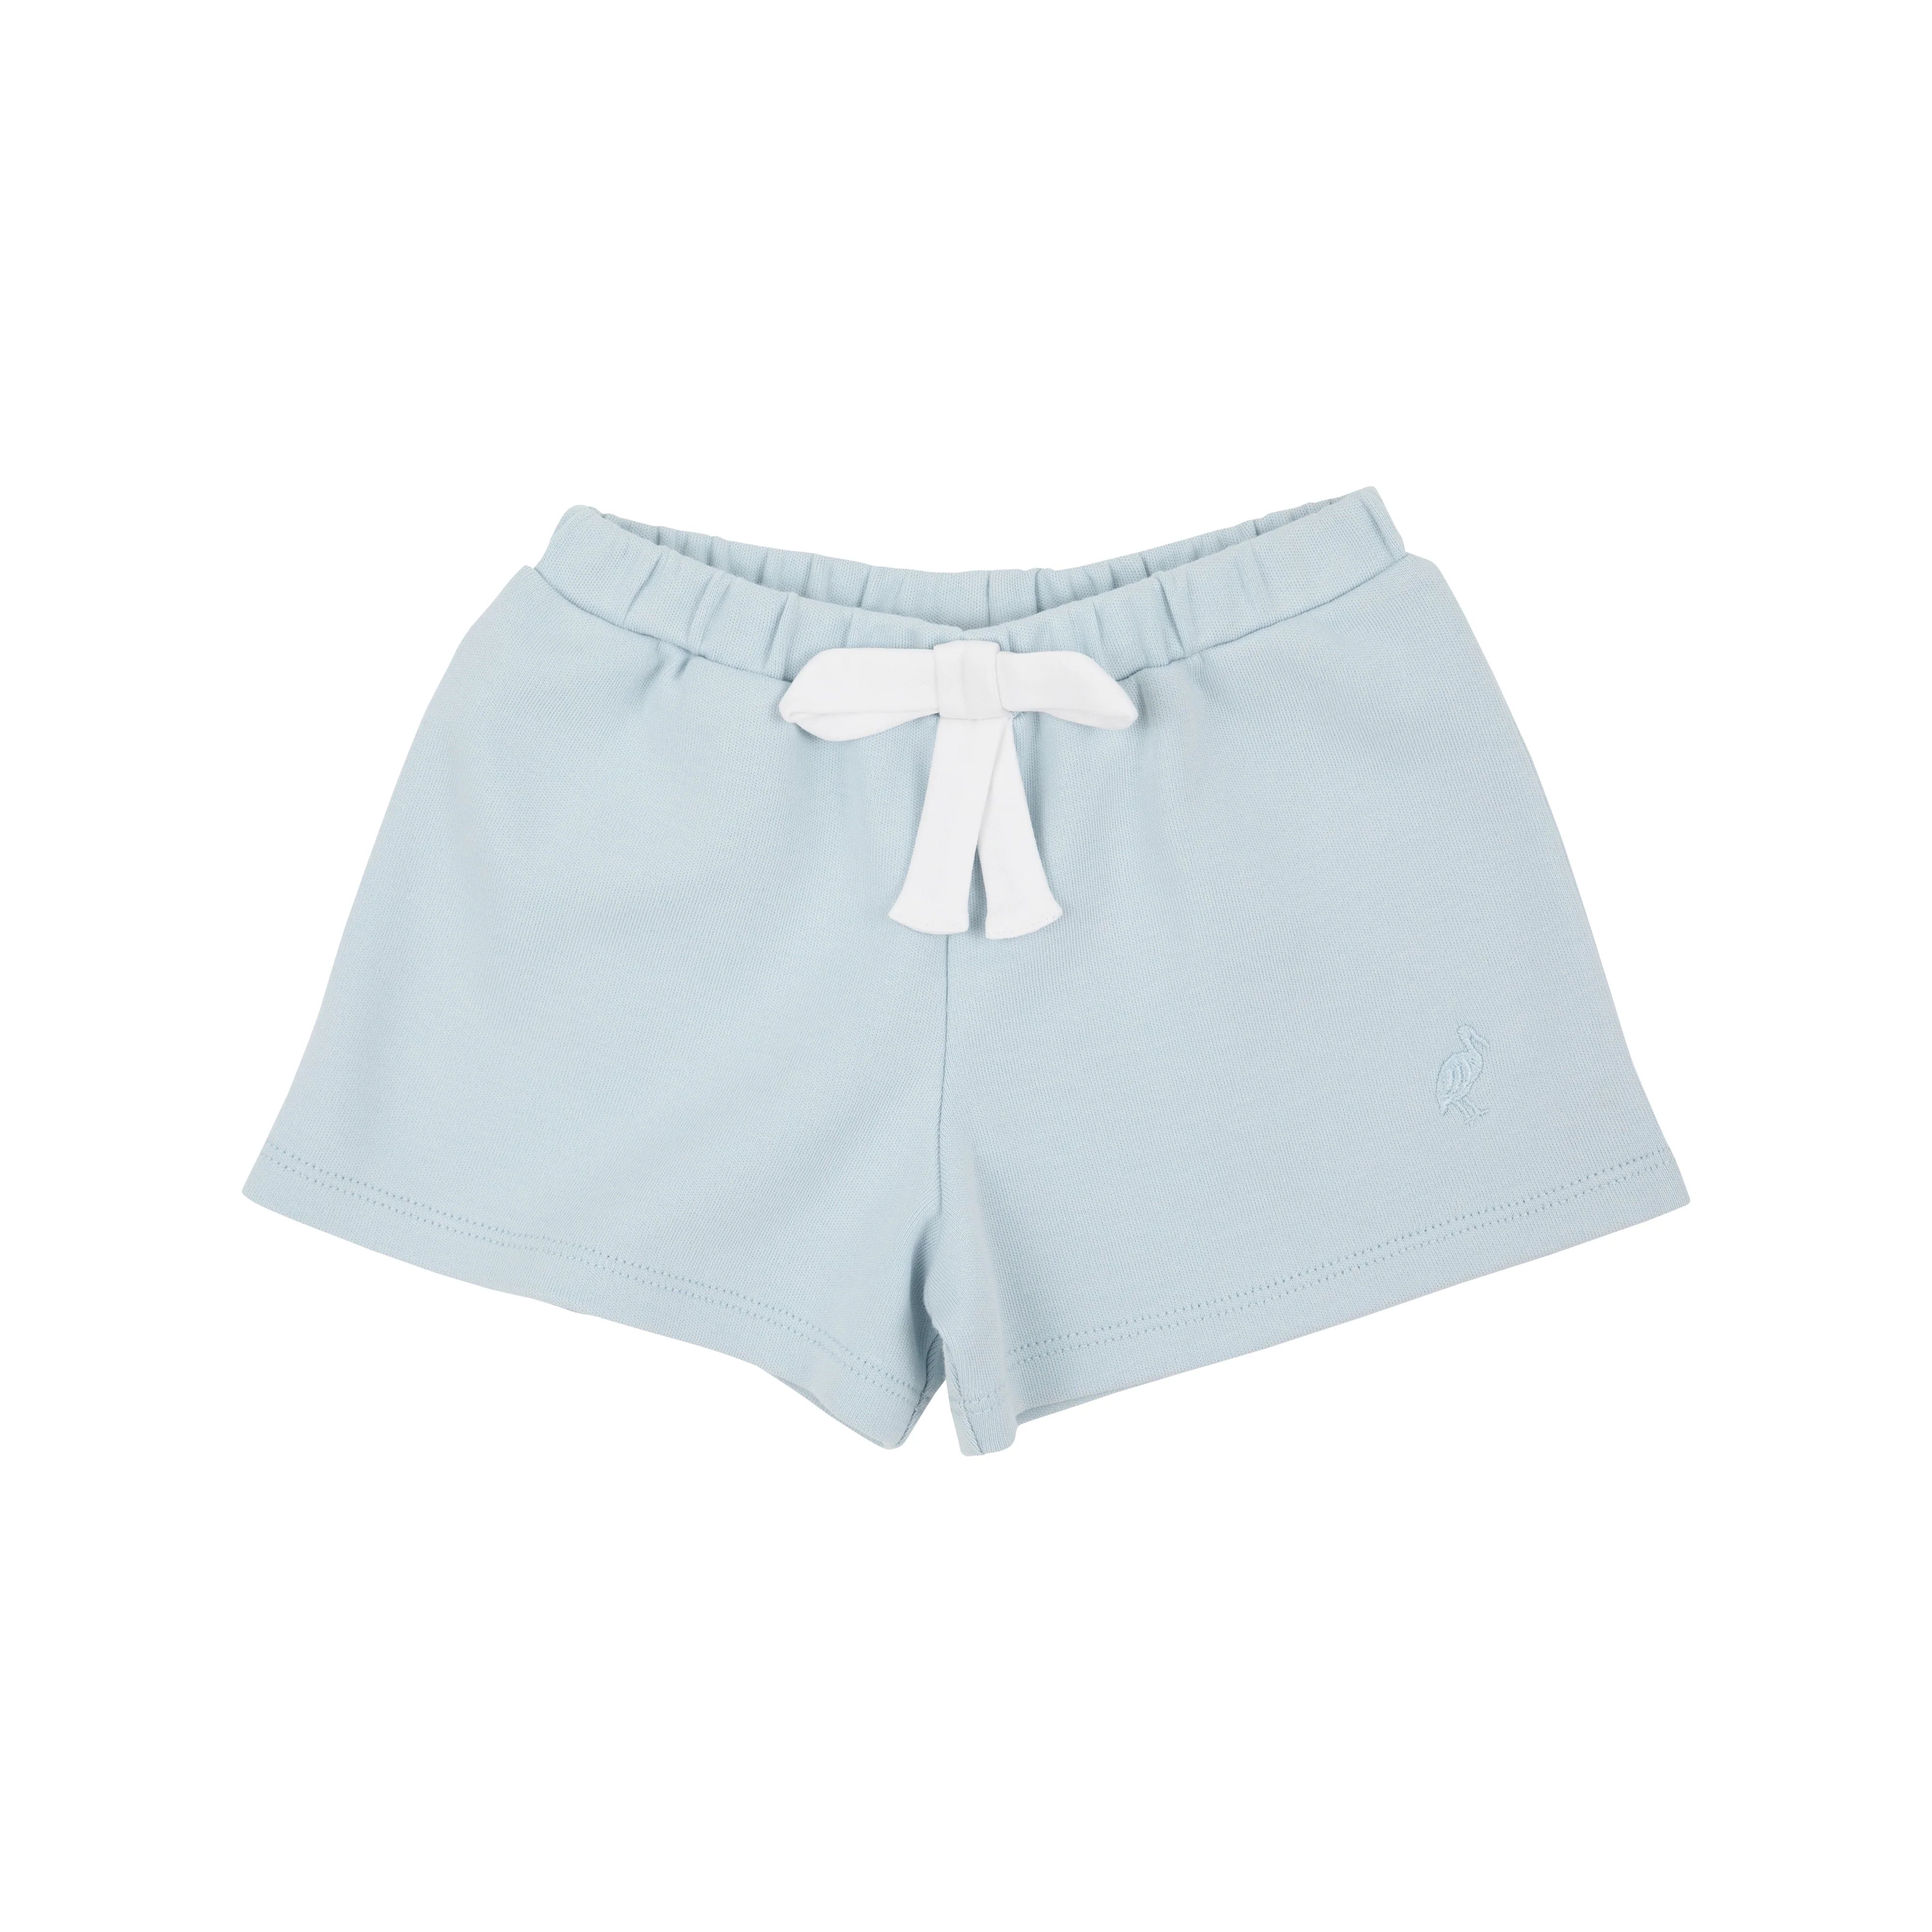 Shipley Shorts - Buckhead Blue with Worth Avenue White | The Beaufort Bonnet Company